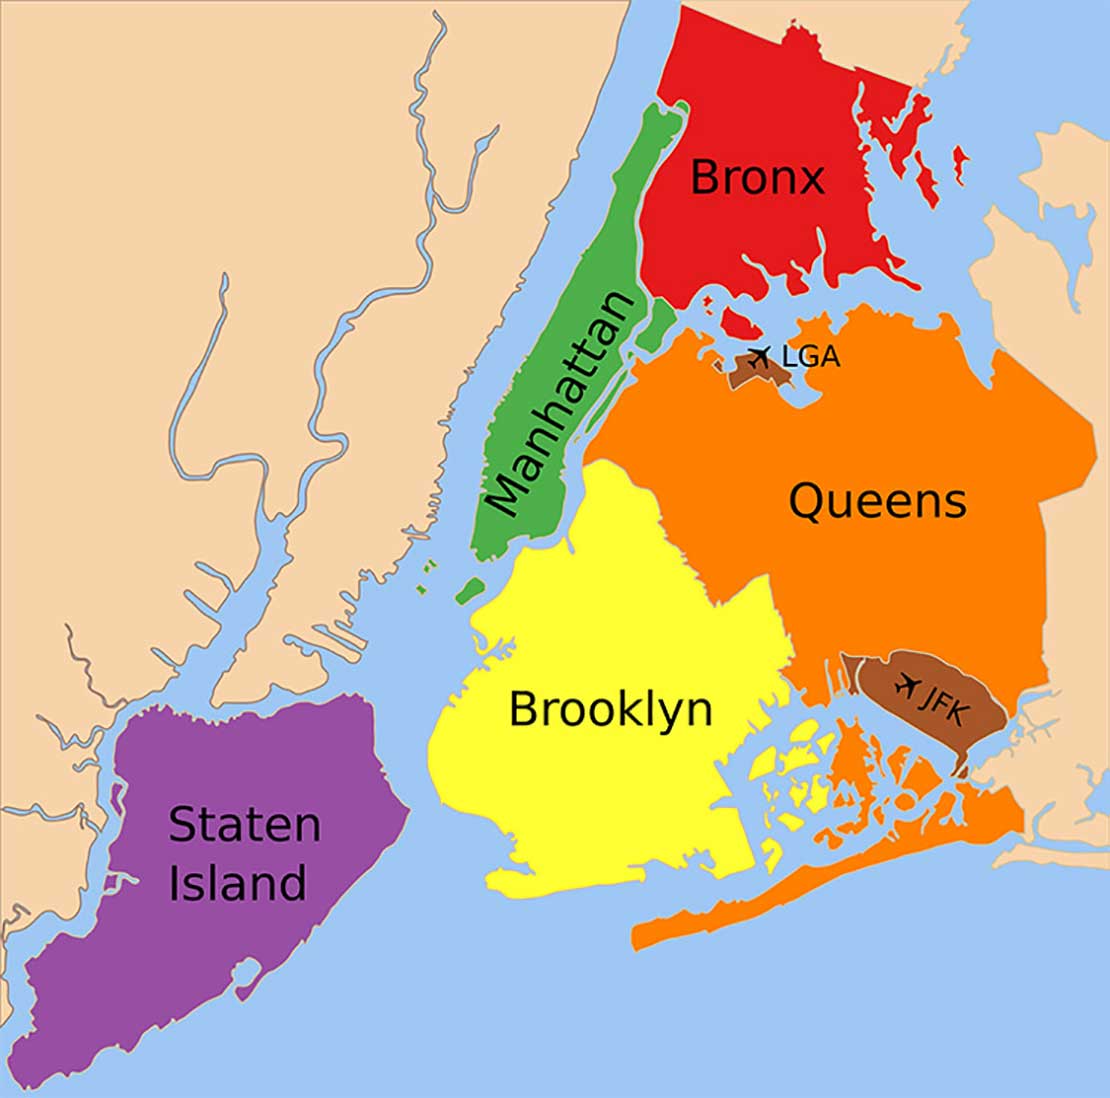 5 Boroughs of New York City